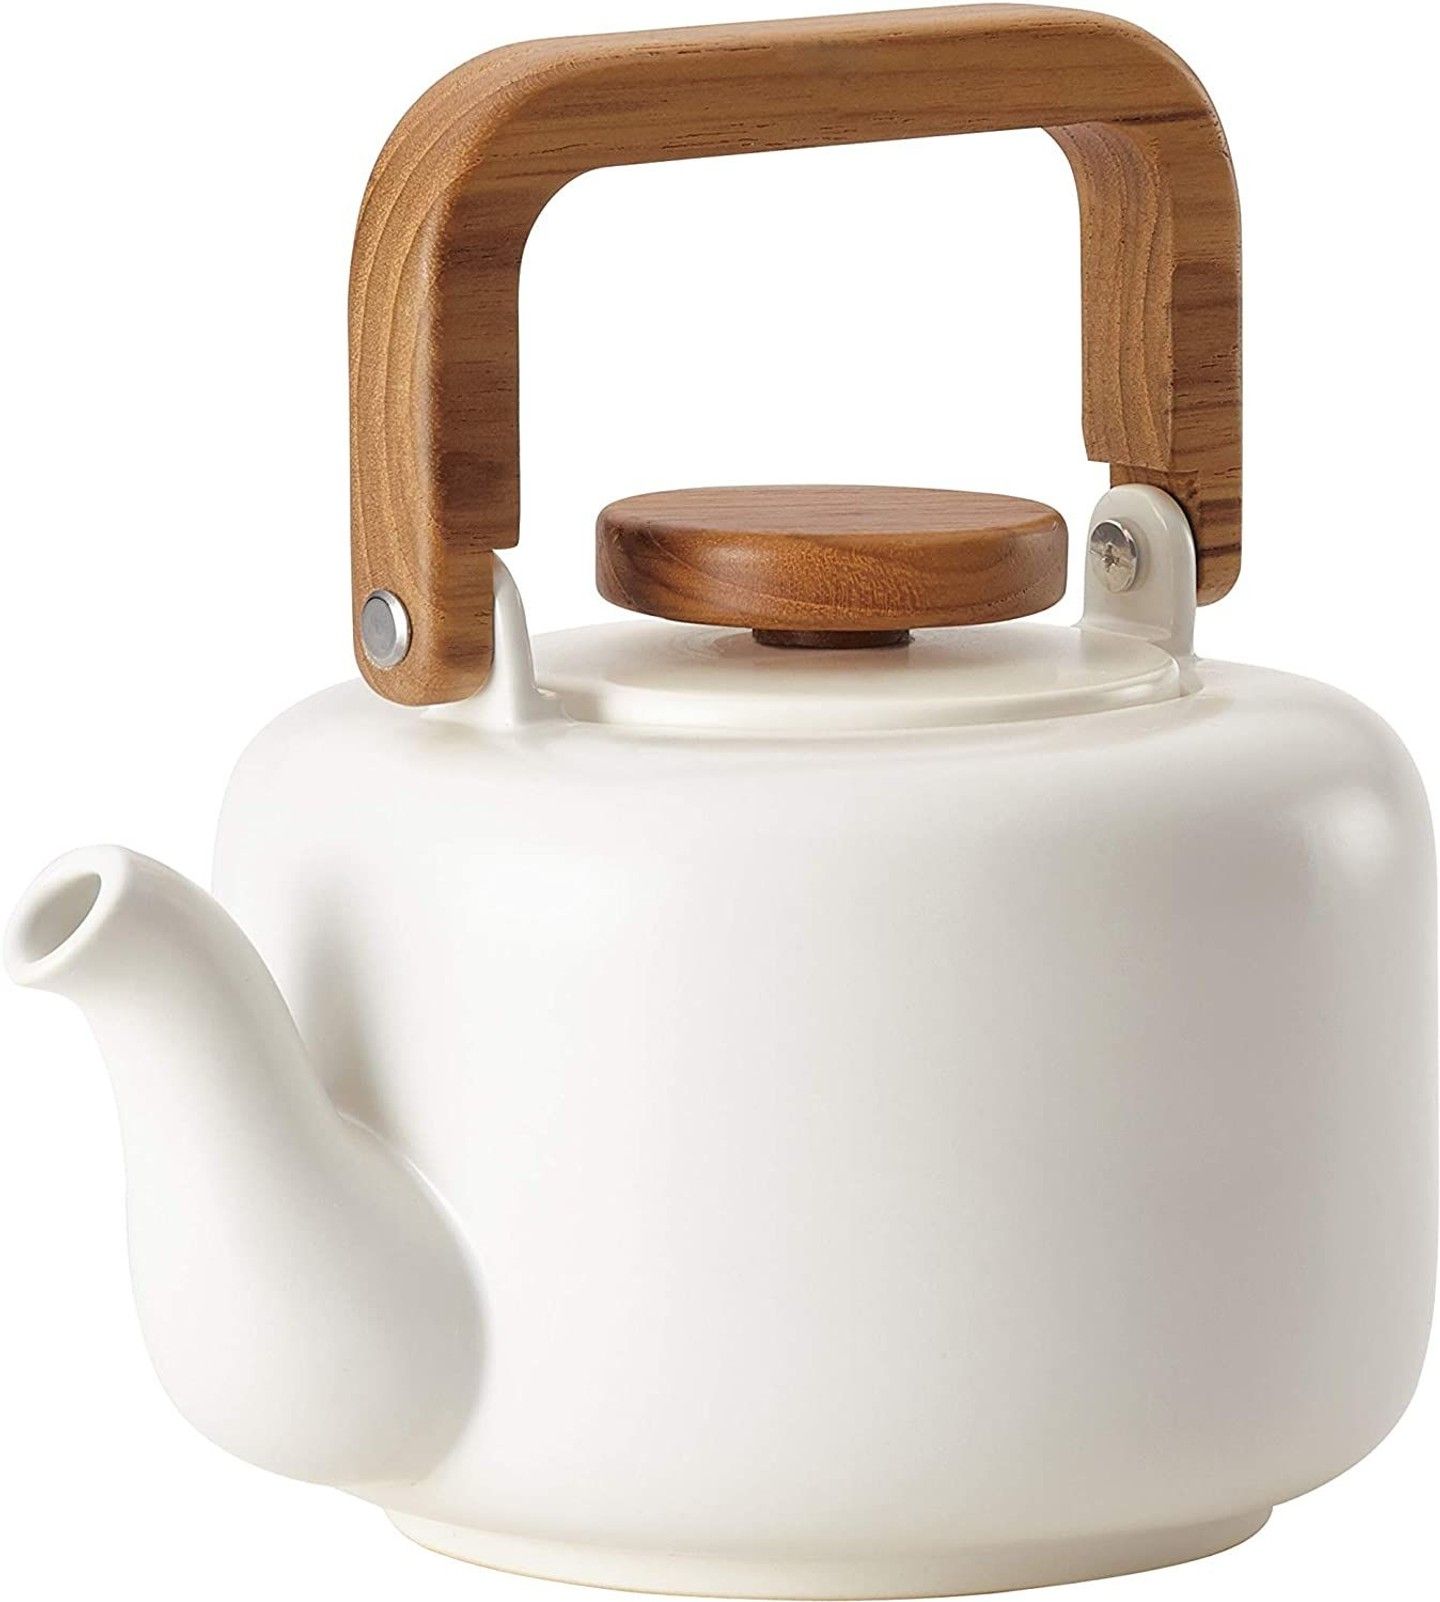 BonJour 8-Cup Ceramic Teapot